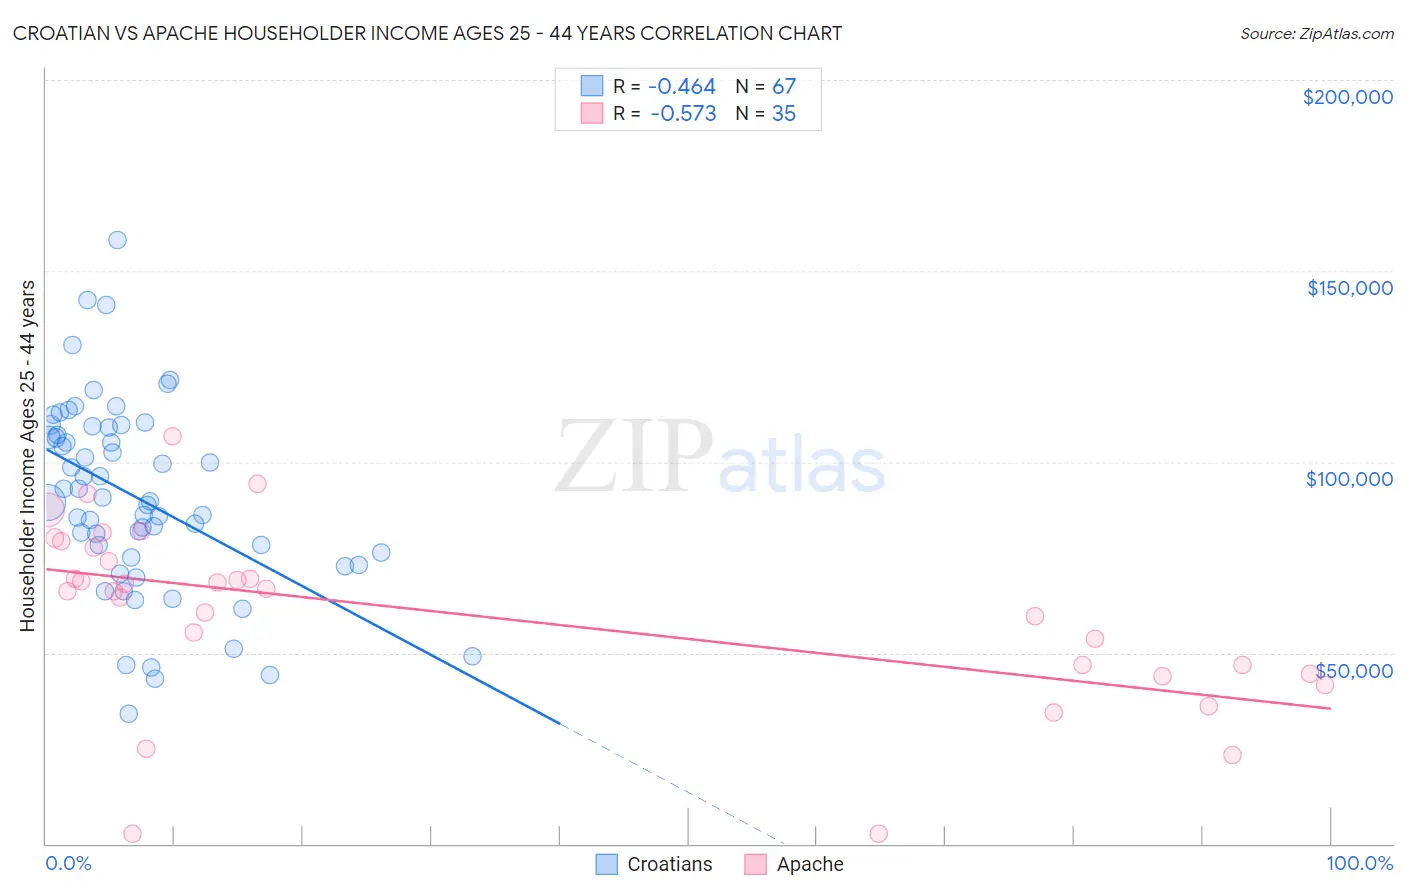 Croatian vs Apache Householder Income Ages 25 - 44 years